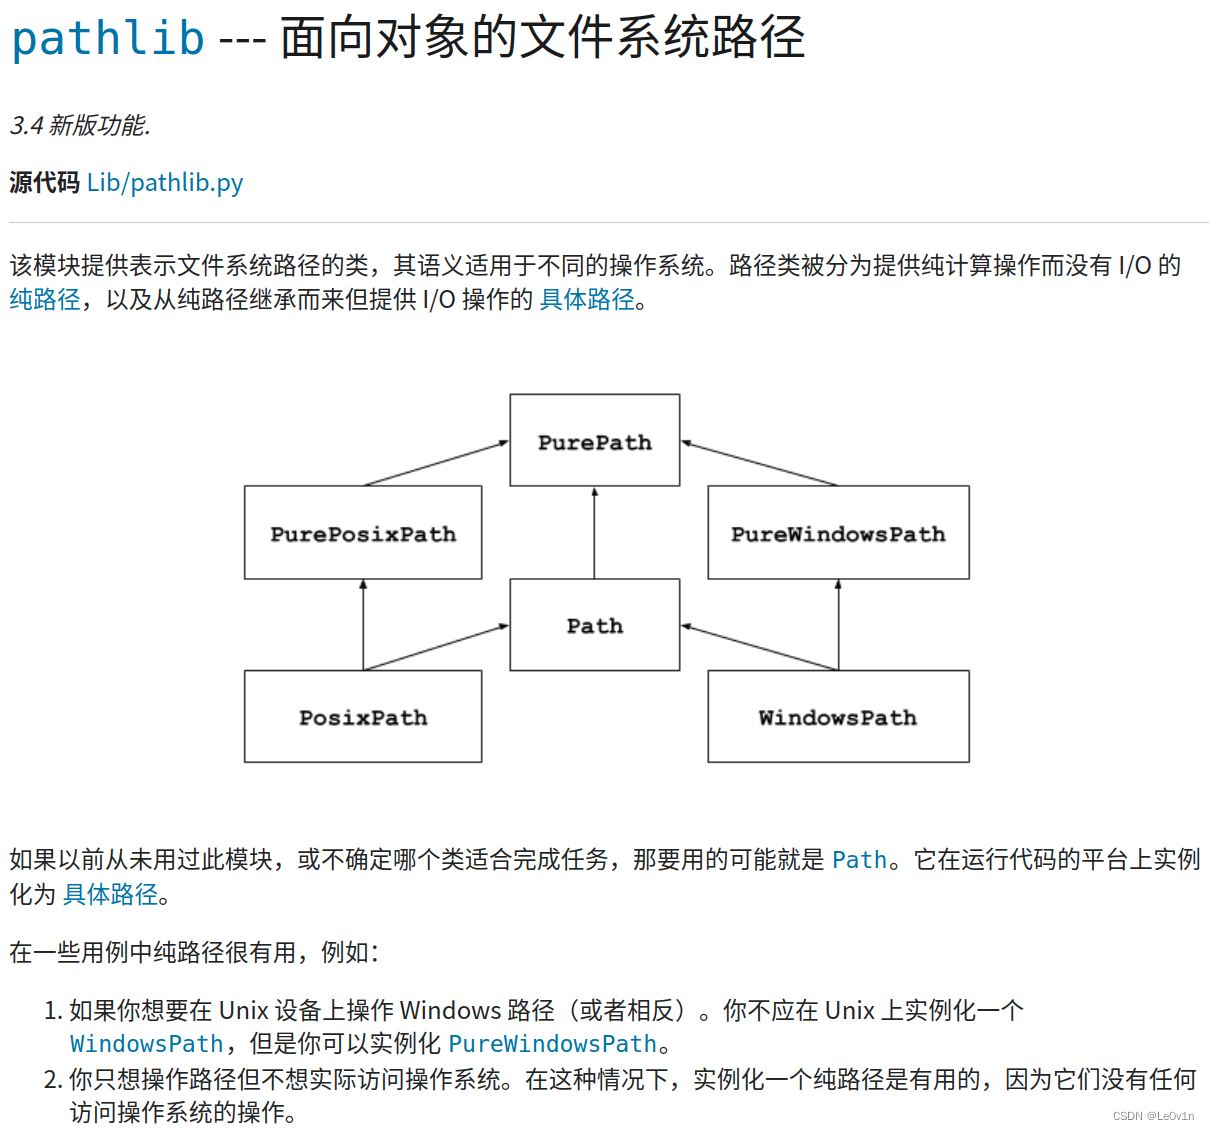 pathlib分类图